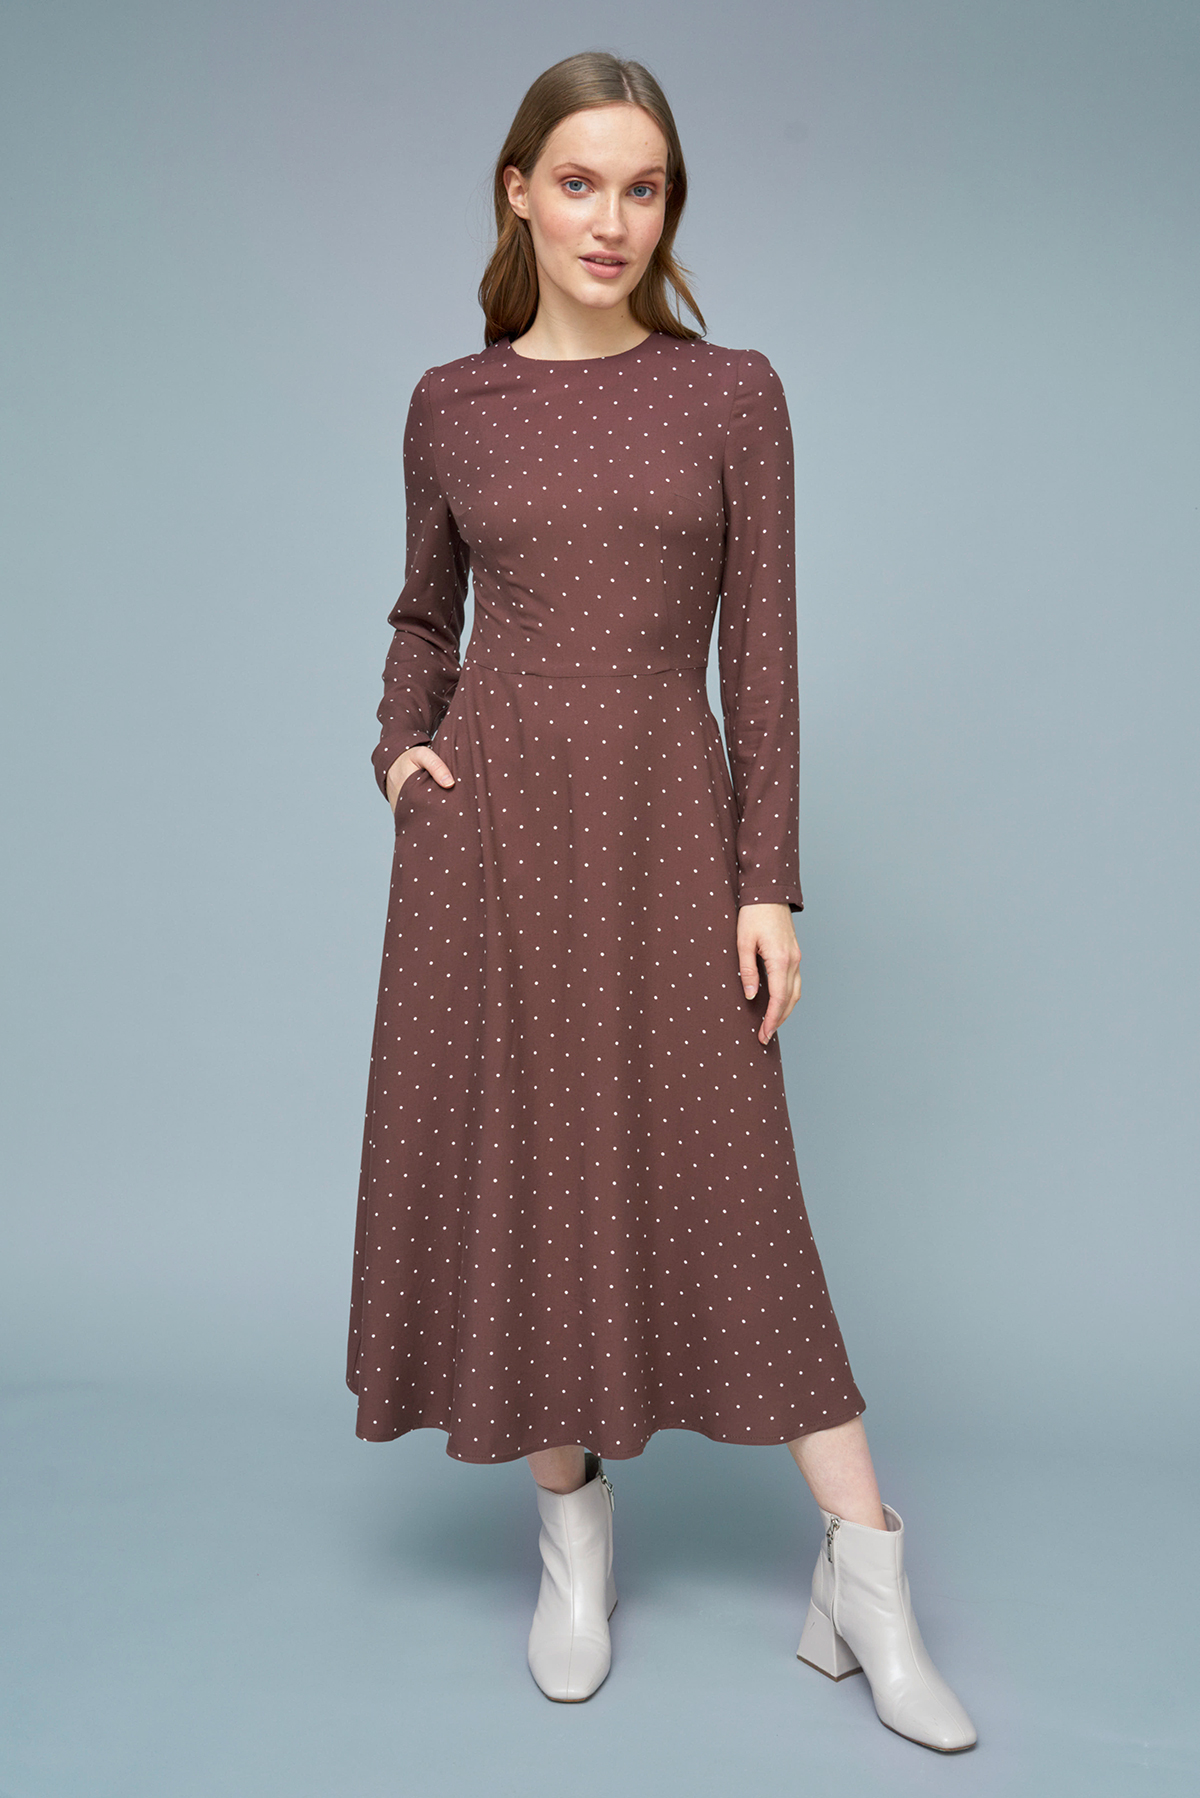 Brown midi dress with print, photo 2